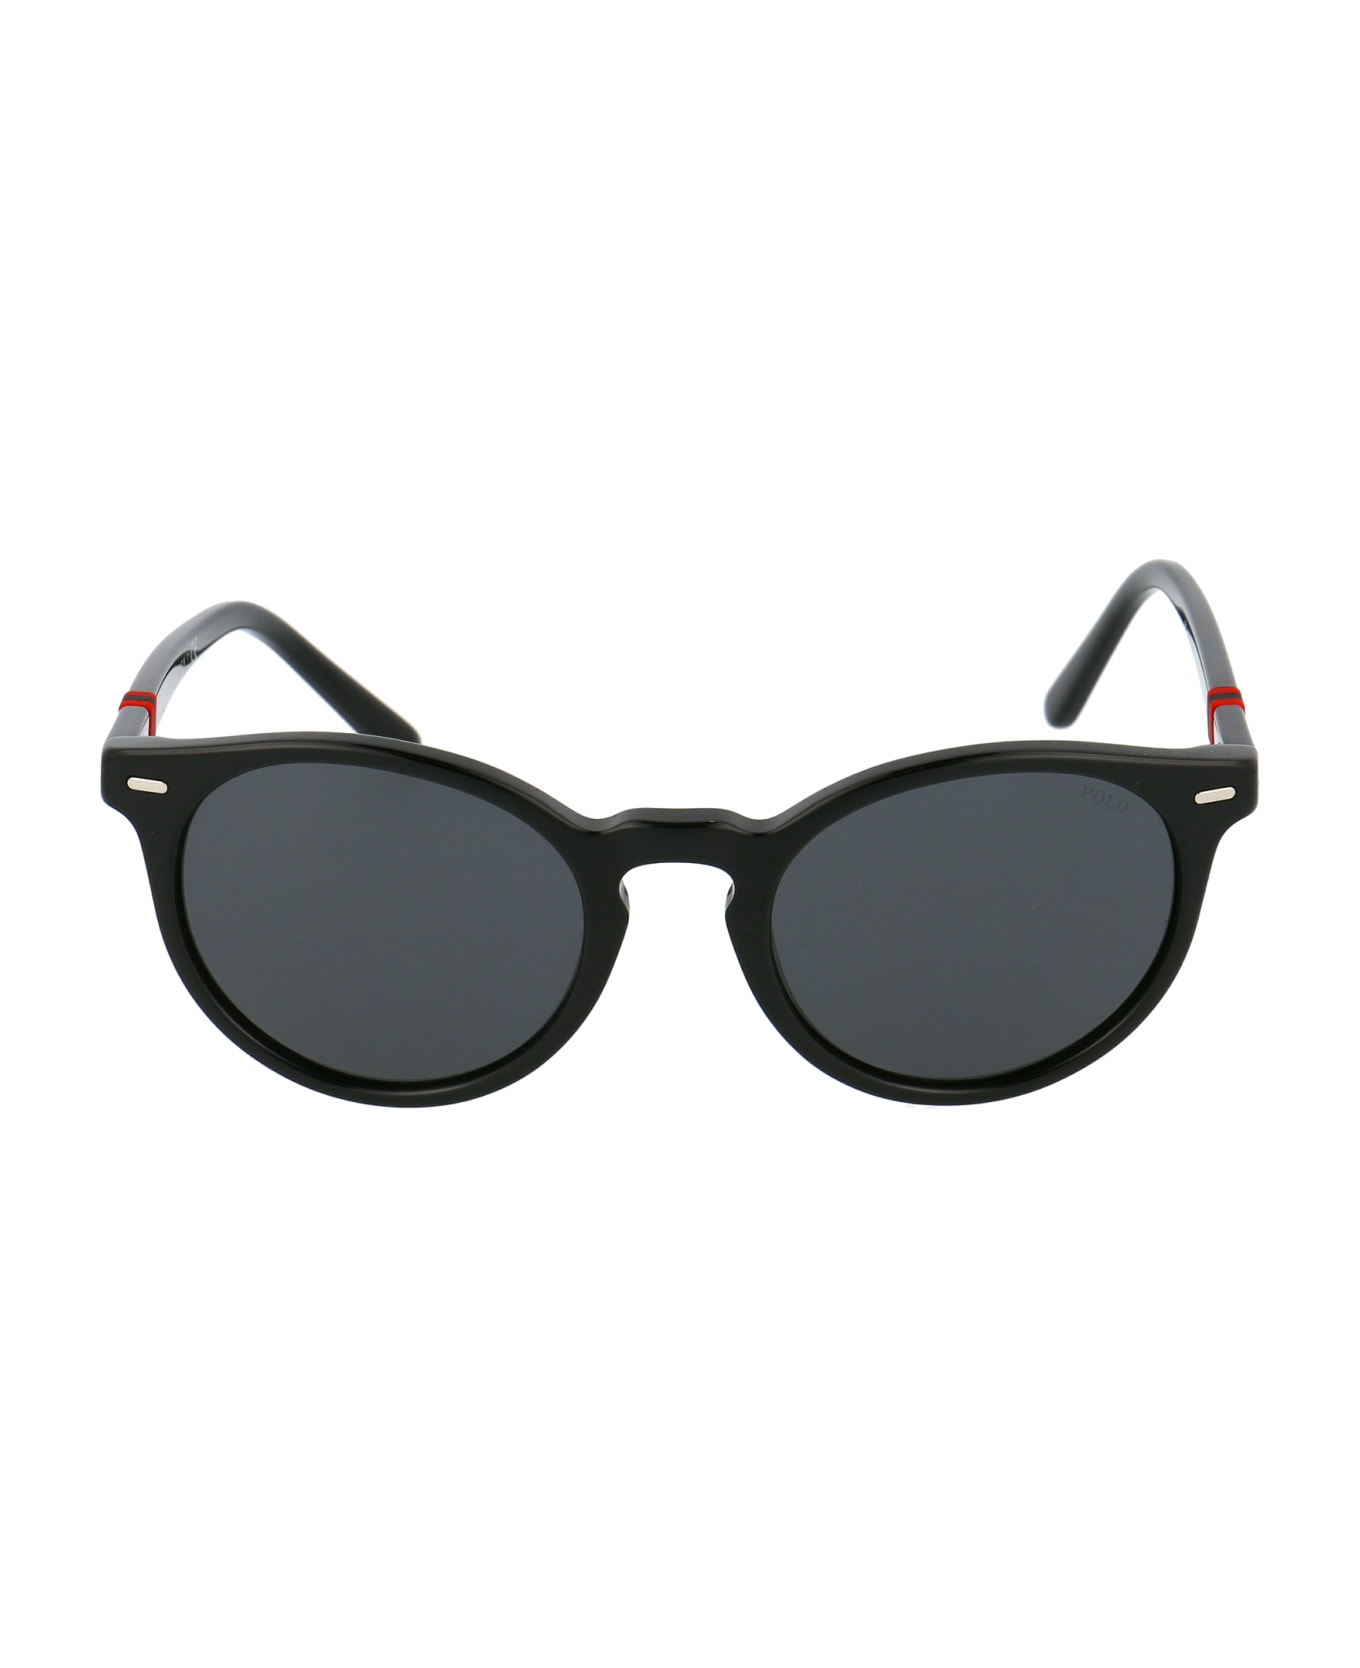 Polo Ralph Lauren 0ph4151 Sunglasses - 500187 SHINY BLACK サングラス